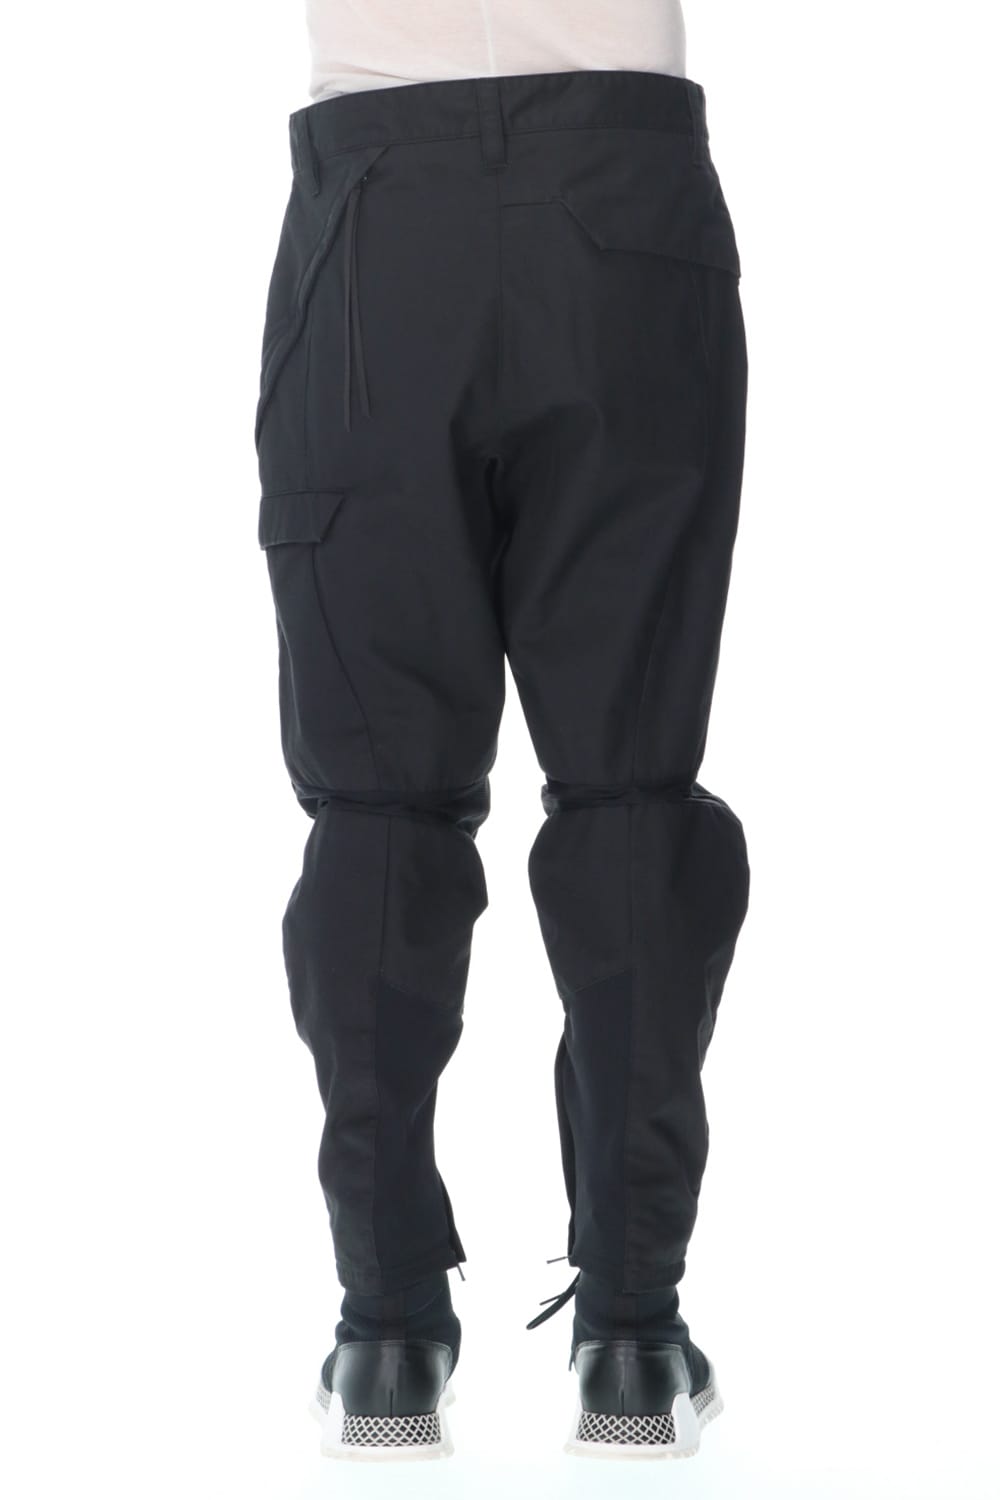 CV10-0008-Black | 10th Anniversary Survival Pants Black 